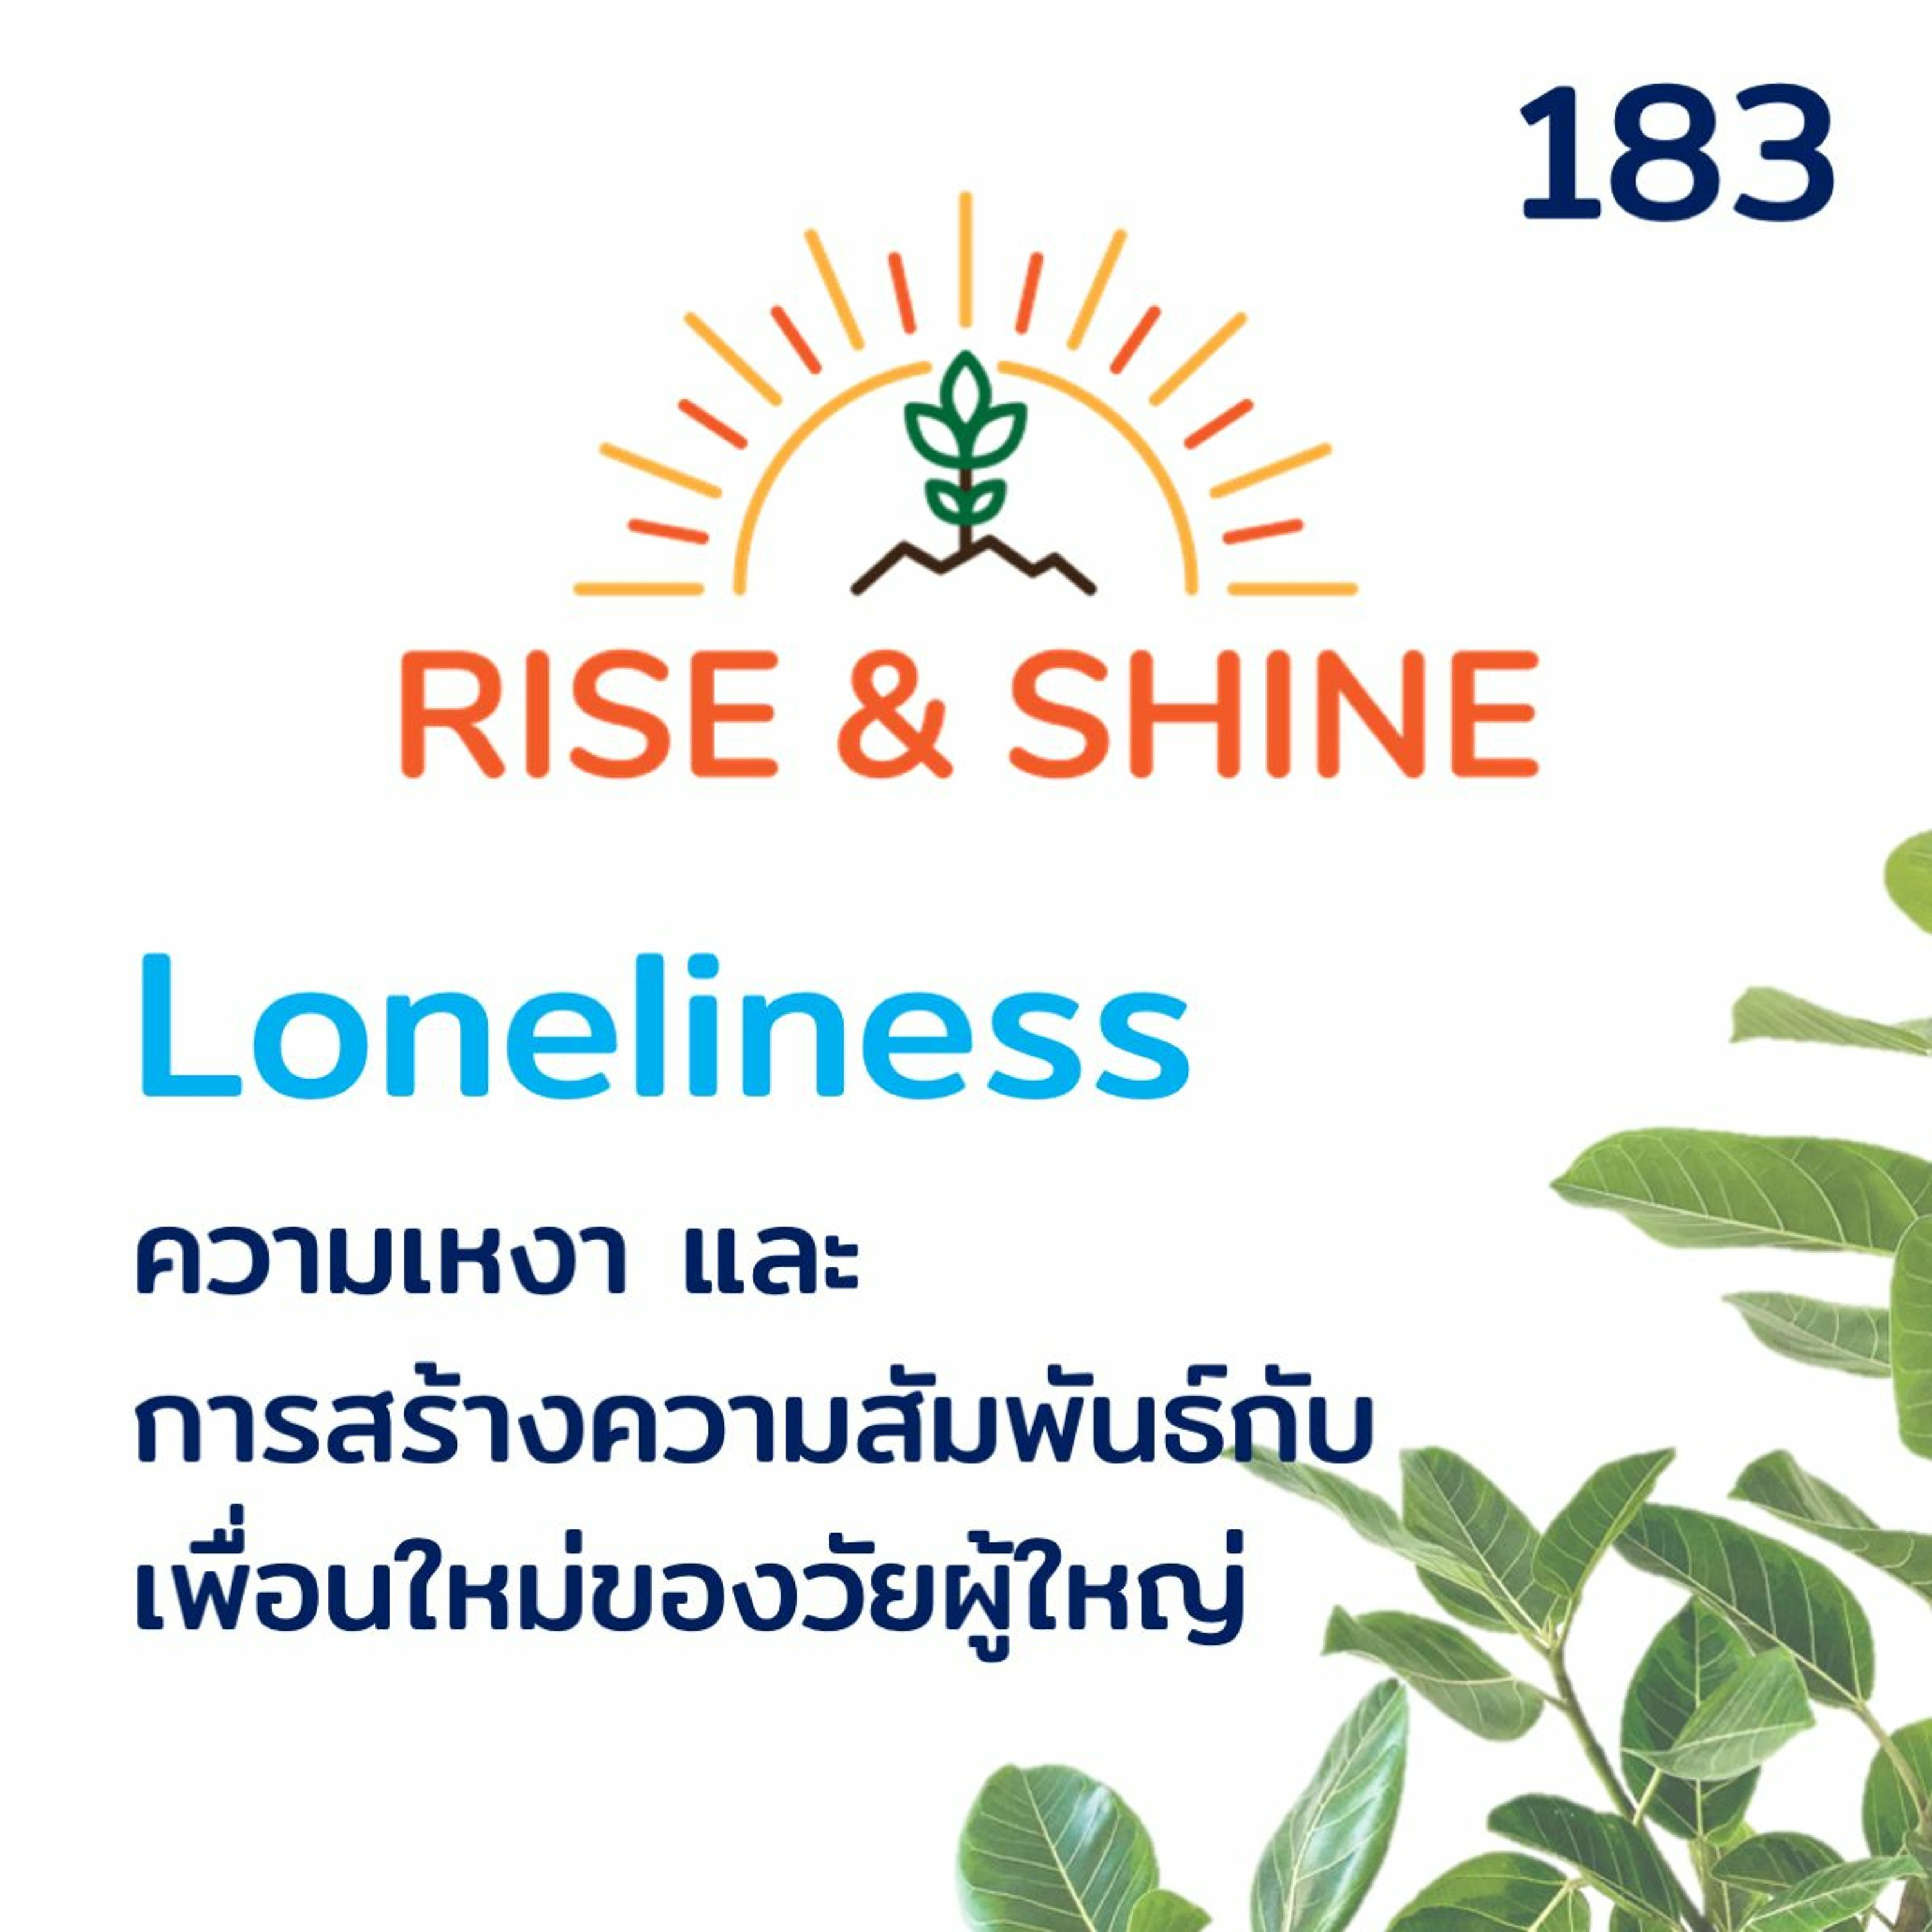 Rise & Shine 183 Loneliness ความเหงา และ การสร้างสัมพันธ์กับเพื่อนใหม่ของวัยผู้ใหญ่